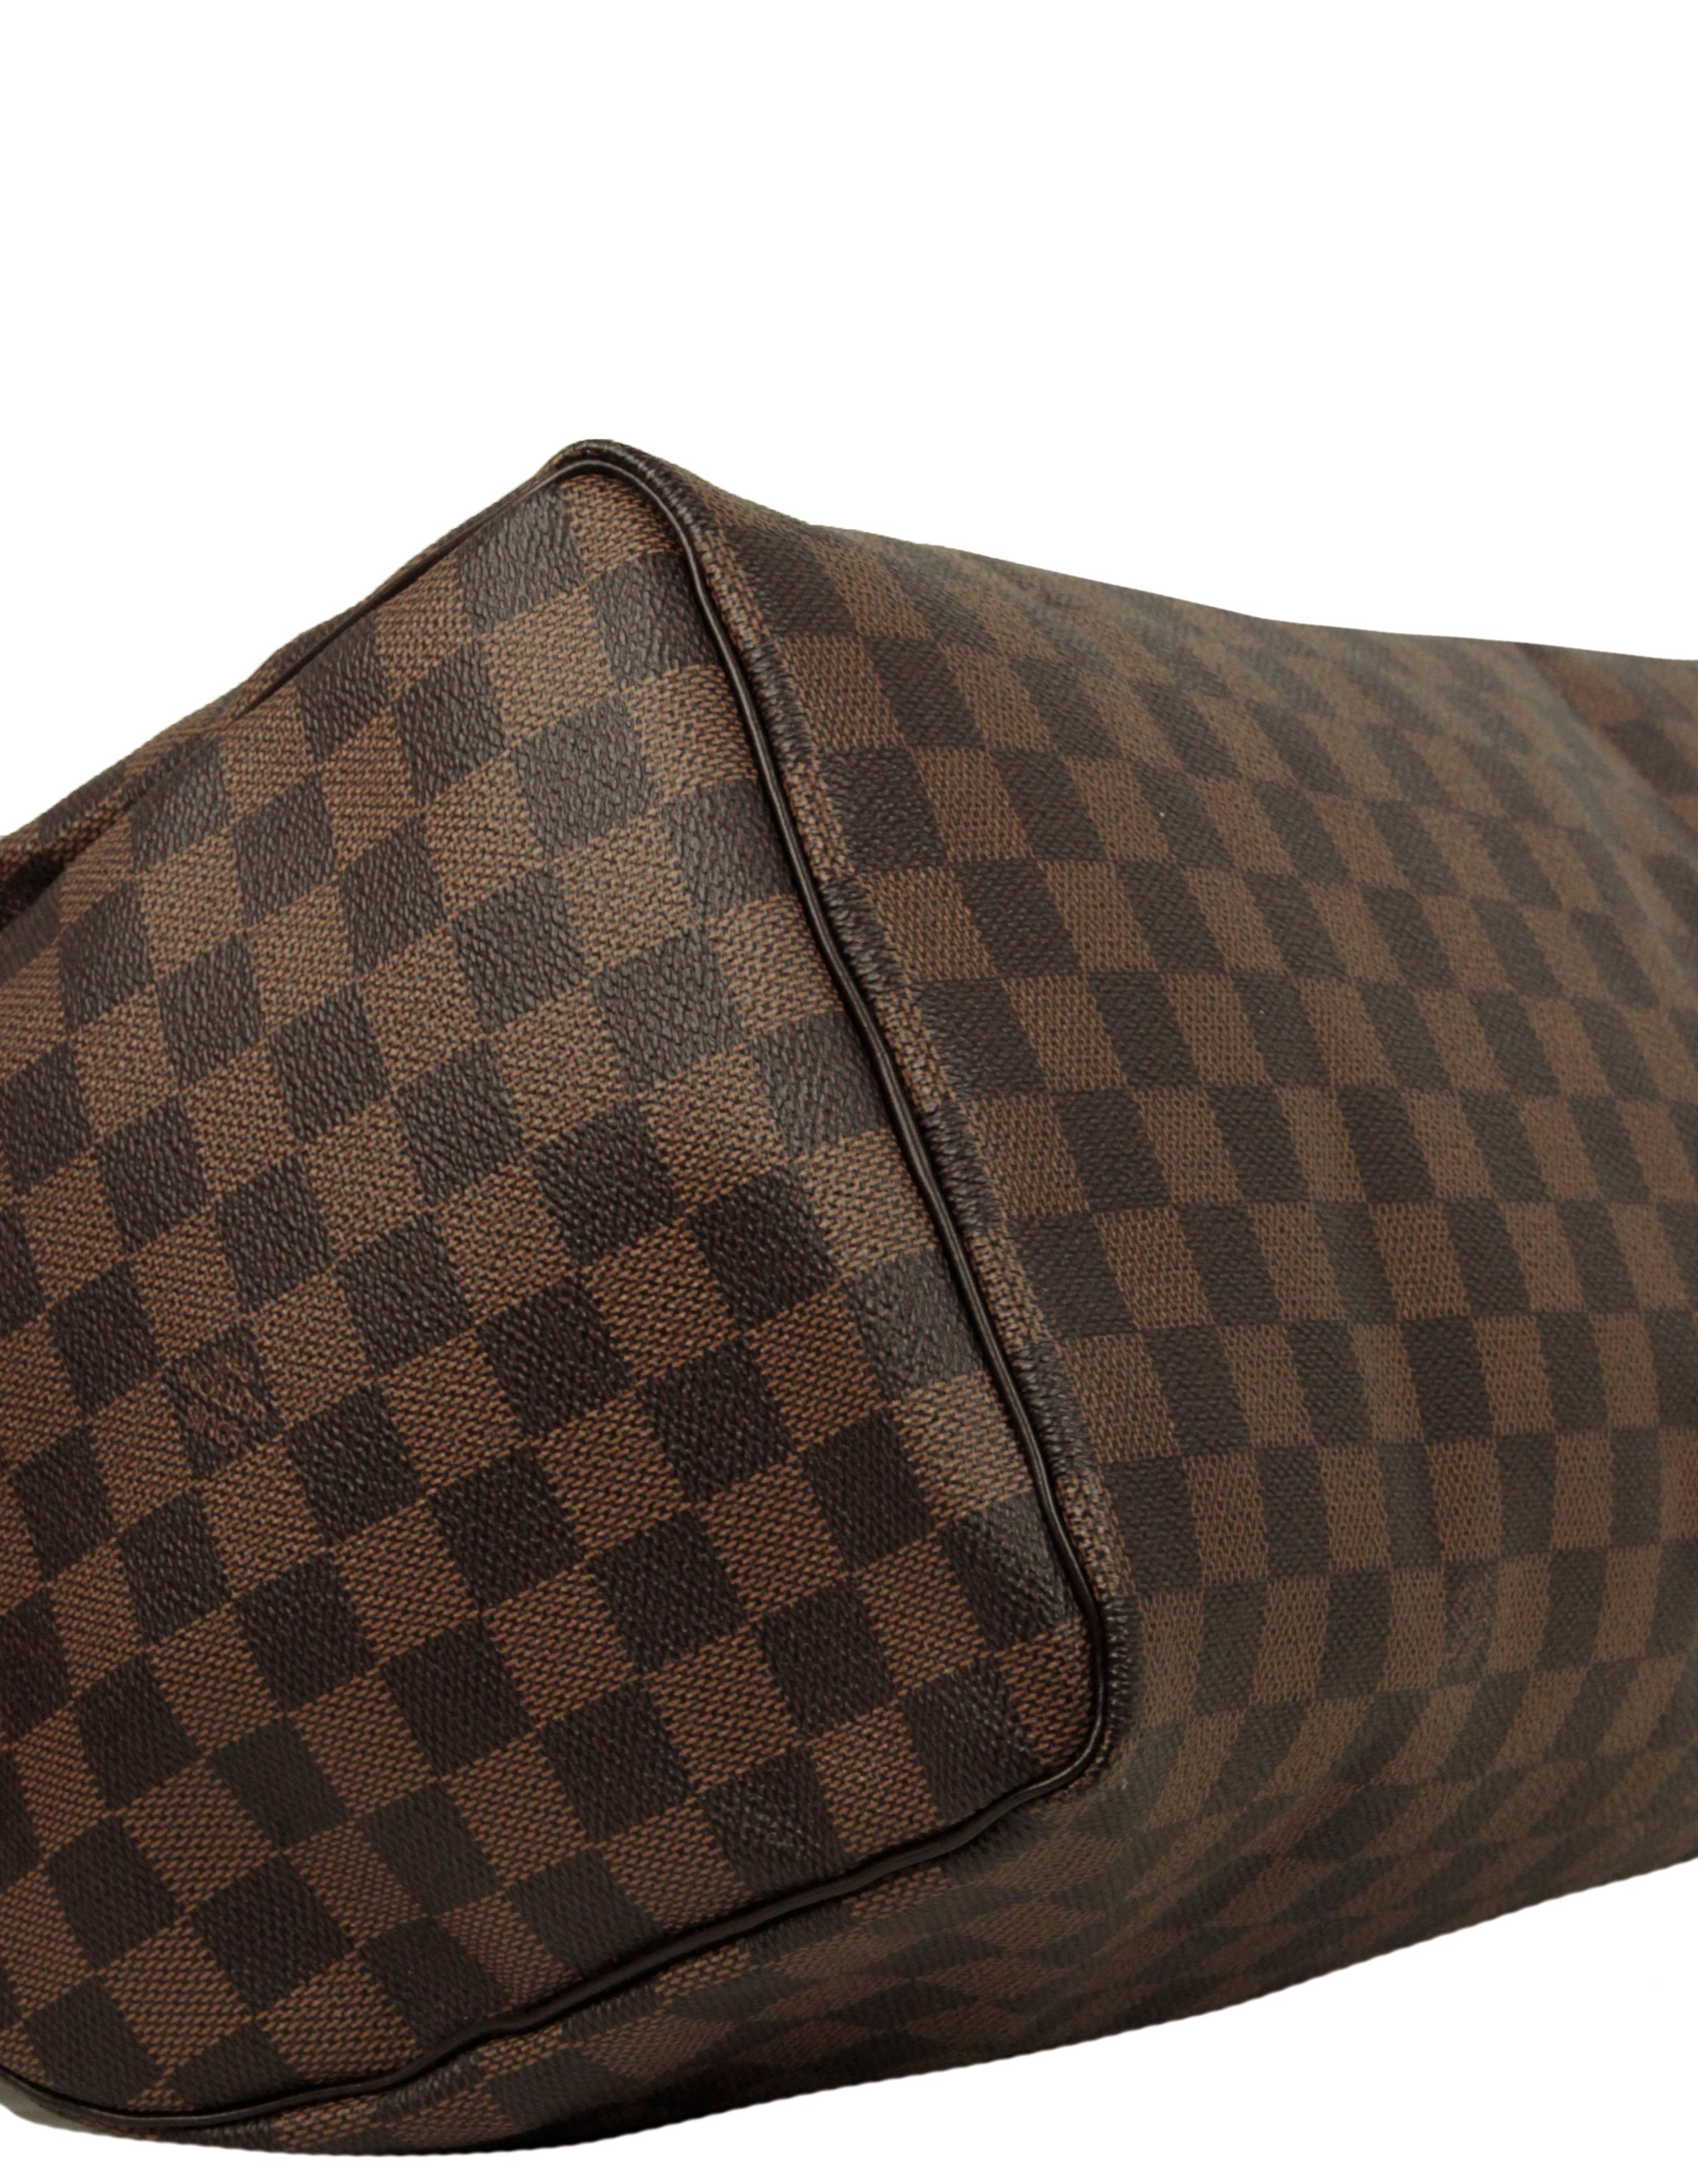 Black Louis Vuitton Damier Ebene Speedy 35 Bag For Sale